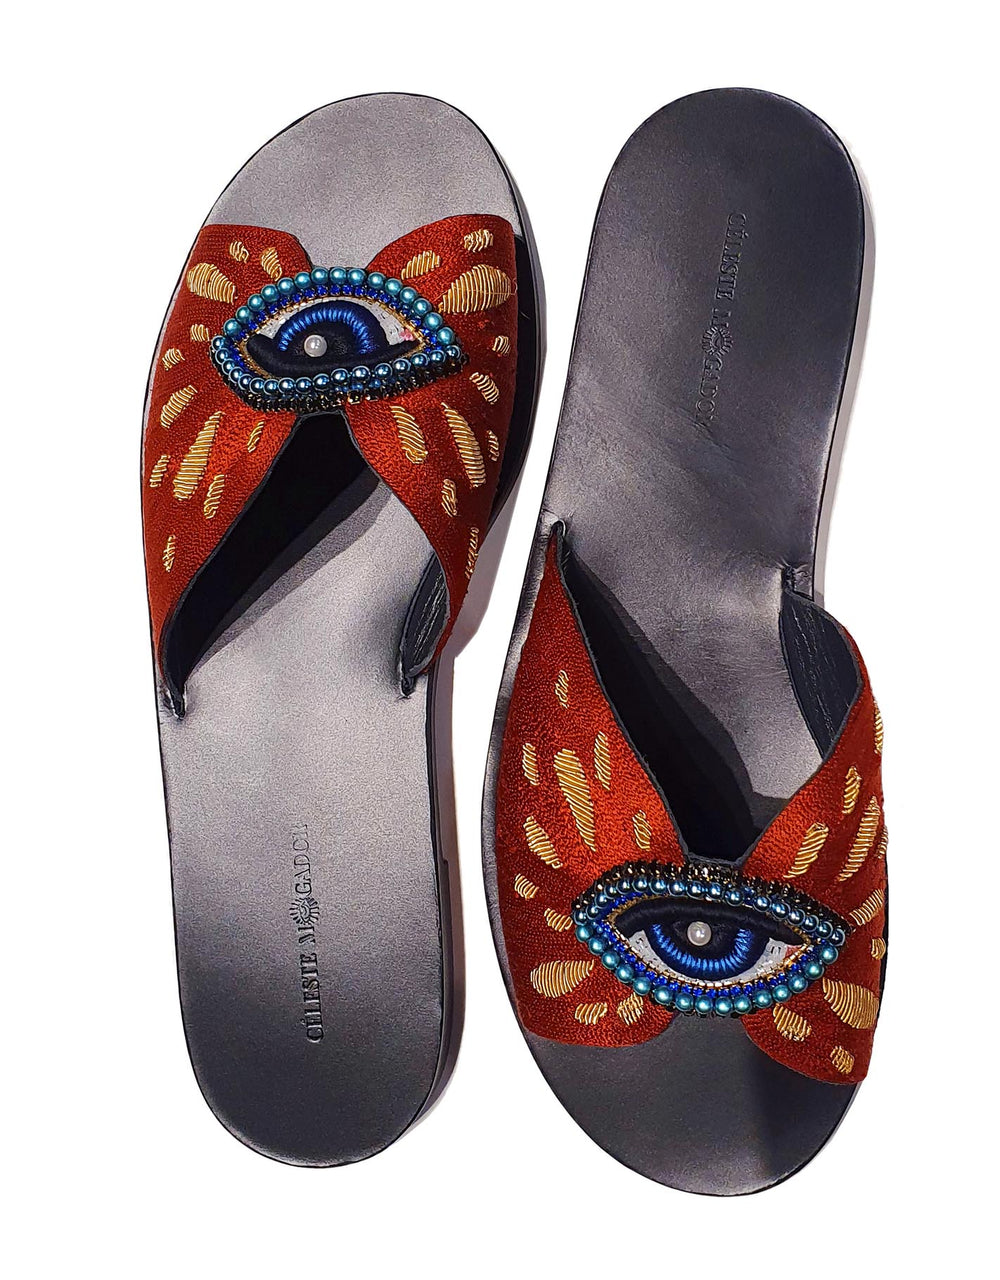 "Blue eye" sandals